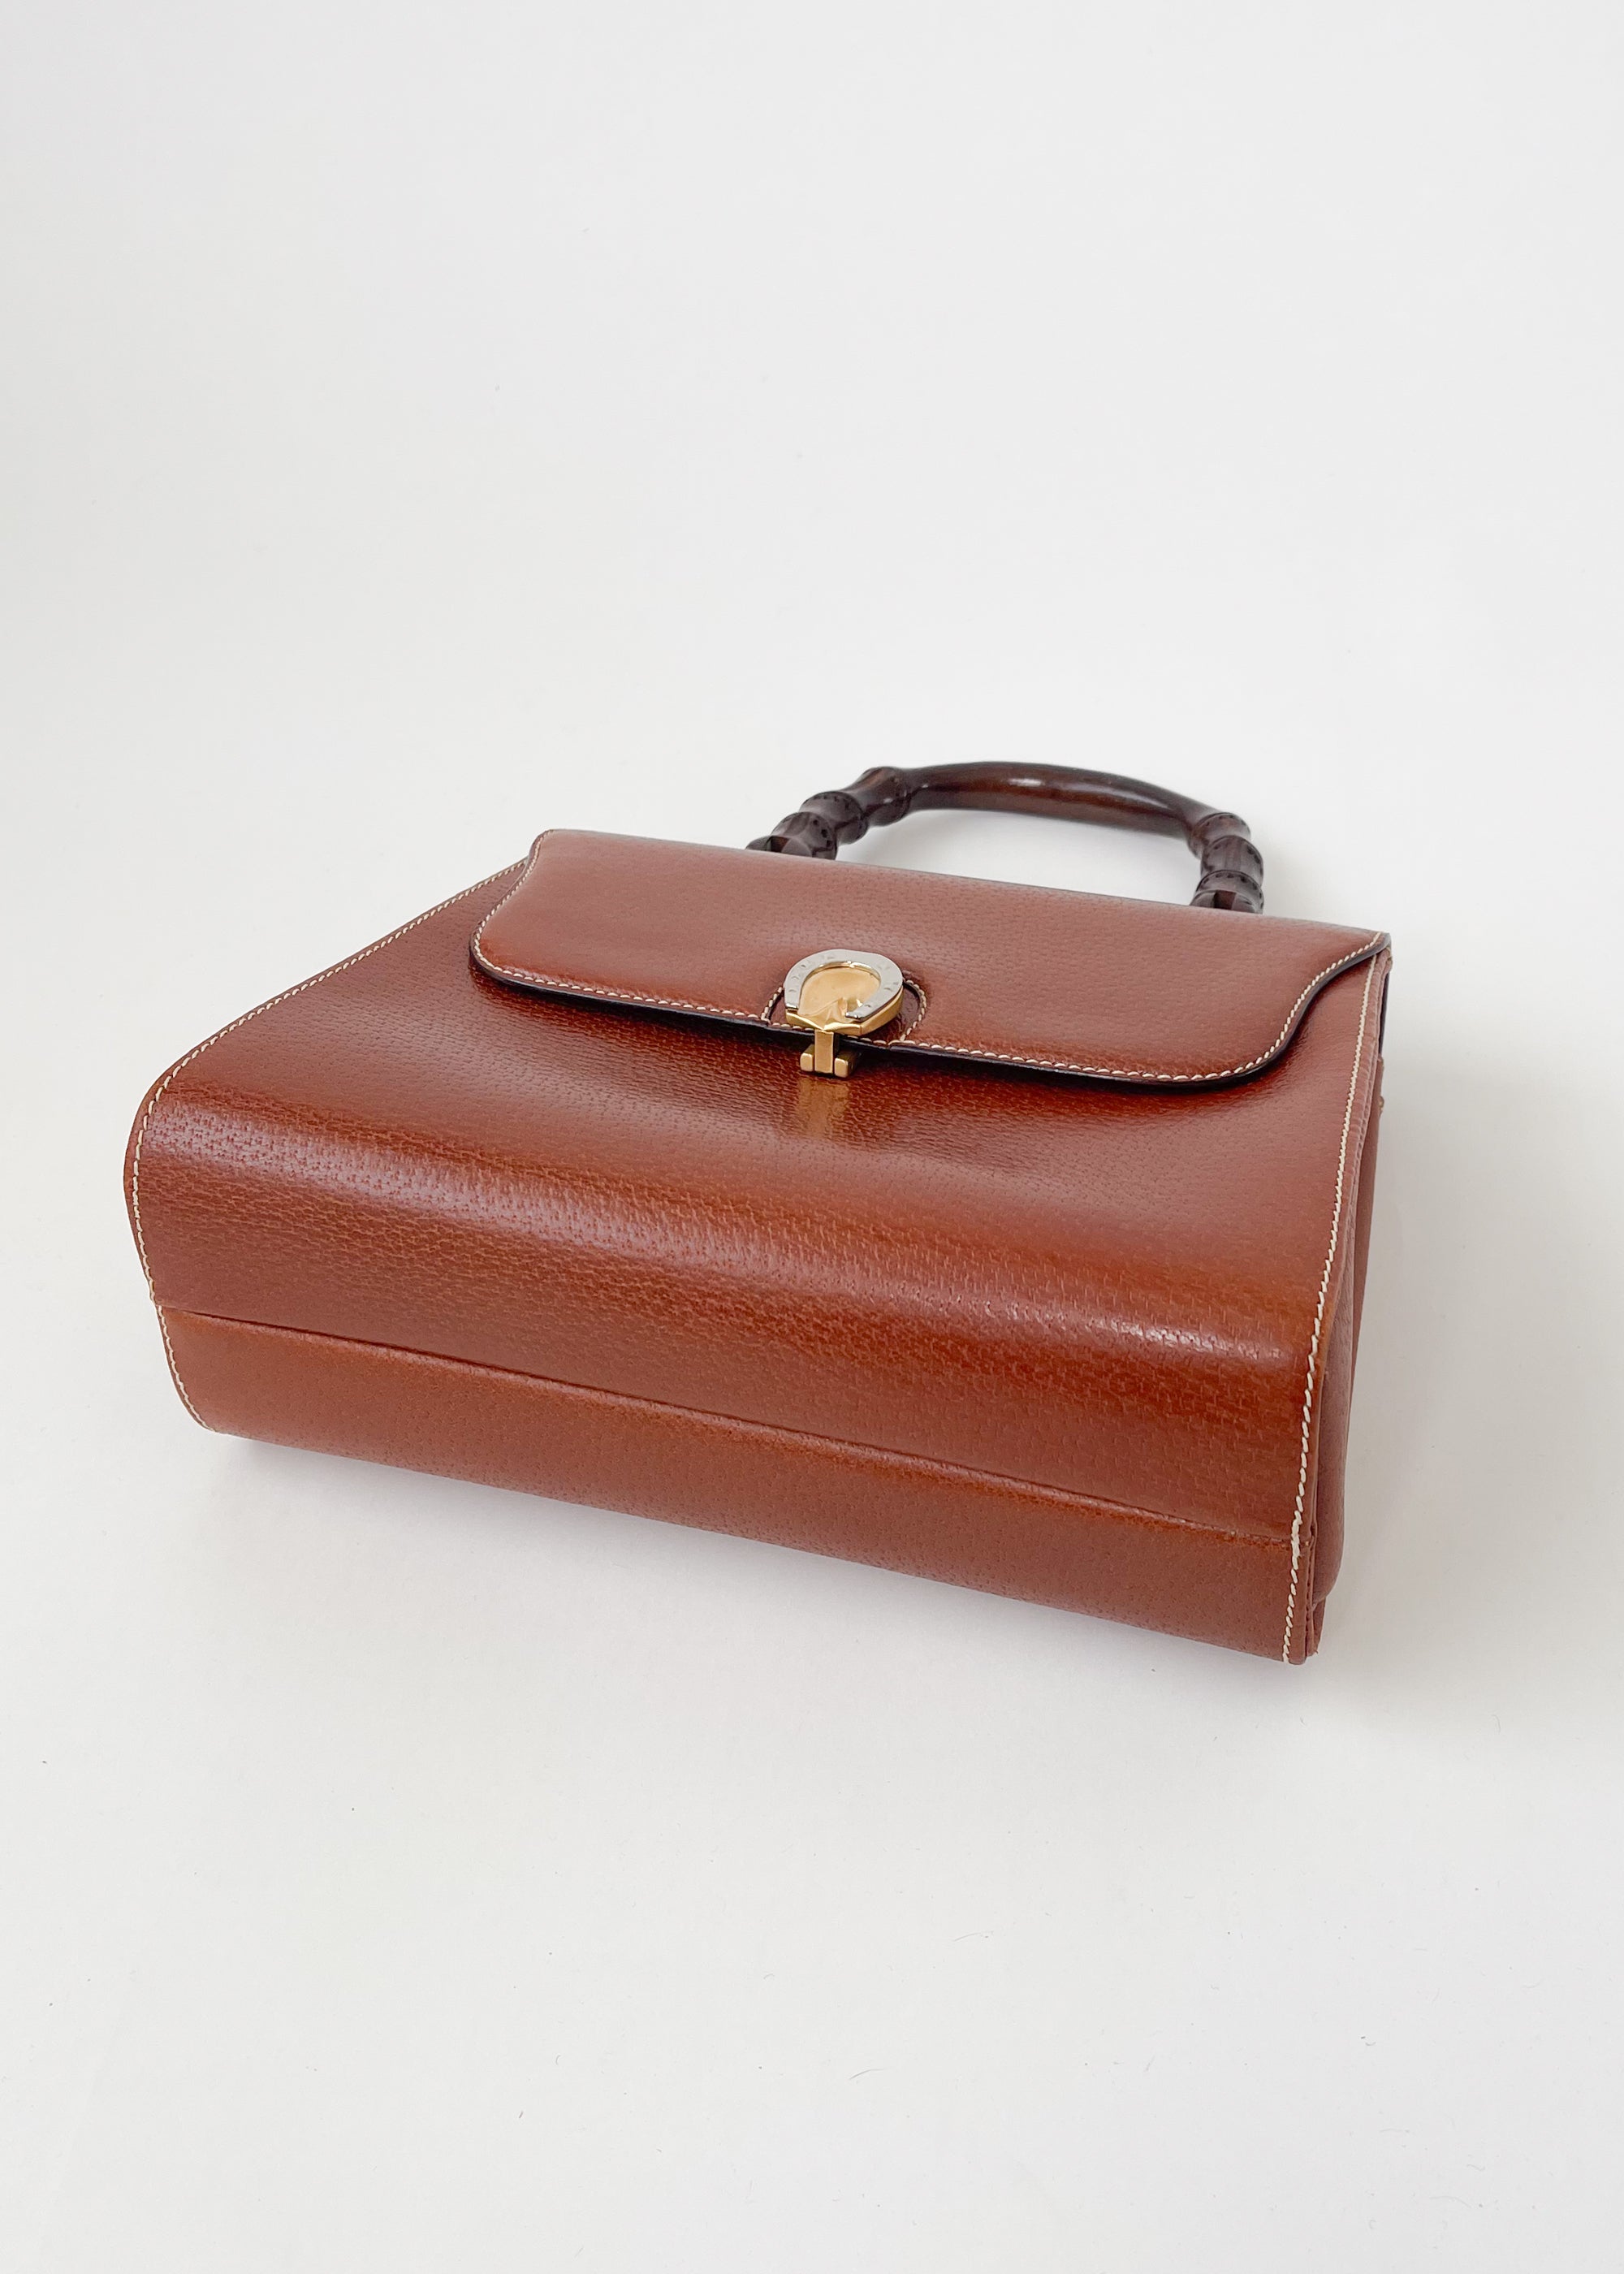 Vintage Gucci Leather Handbag with Carved Wood Handle - Raleigh Vintage